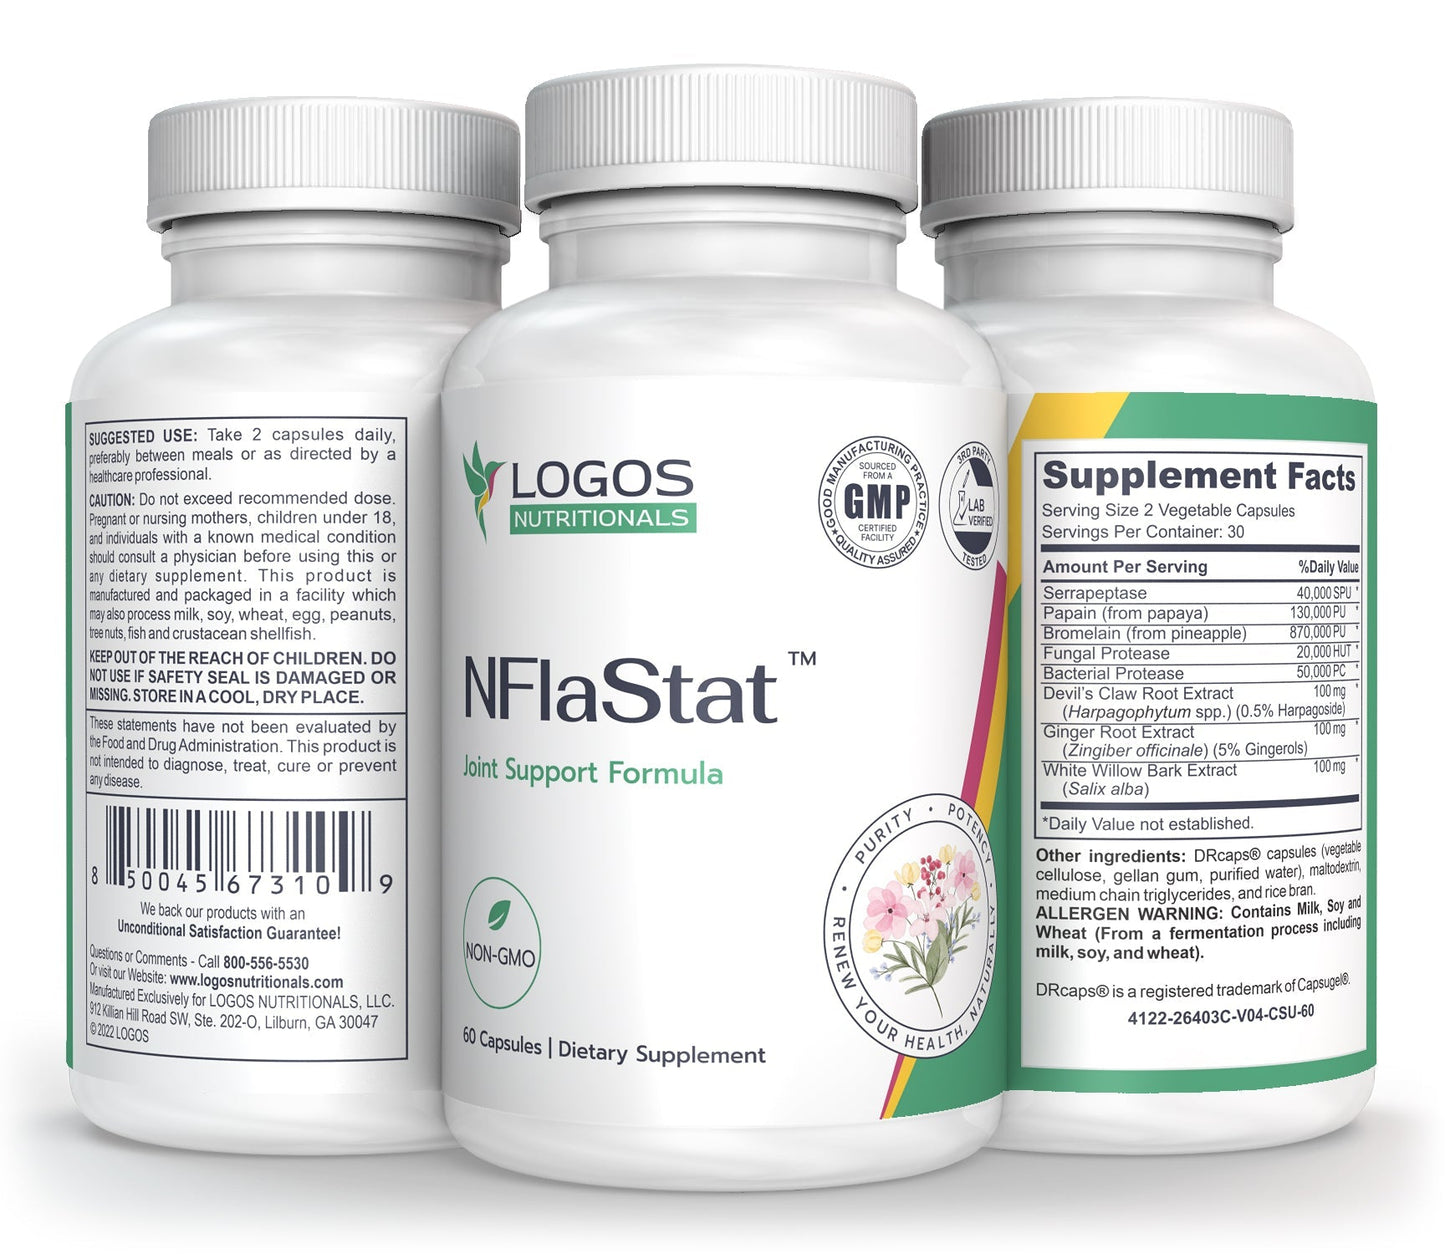 Logos Nutritionals__NFLASTAT